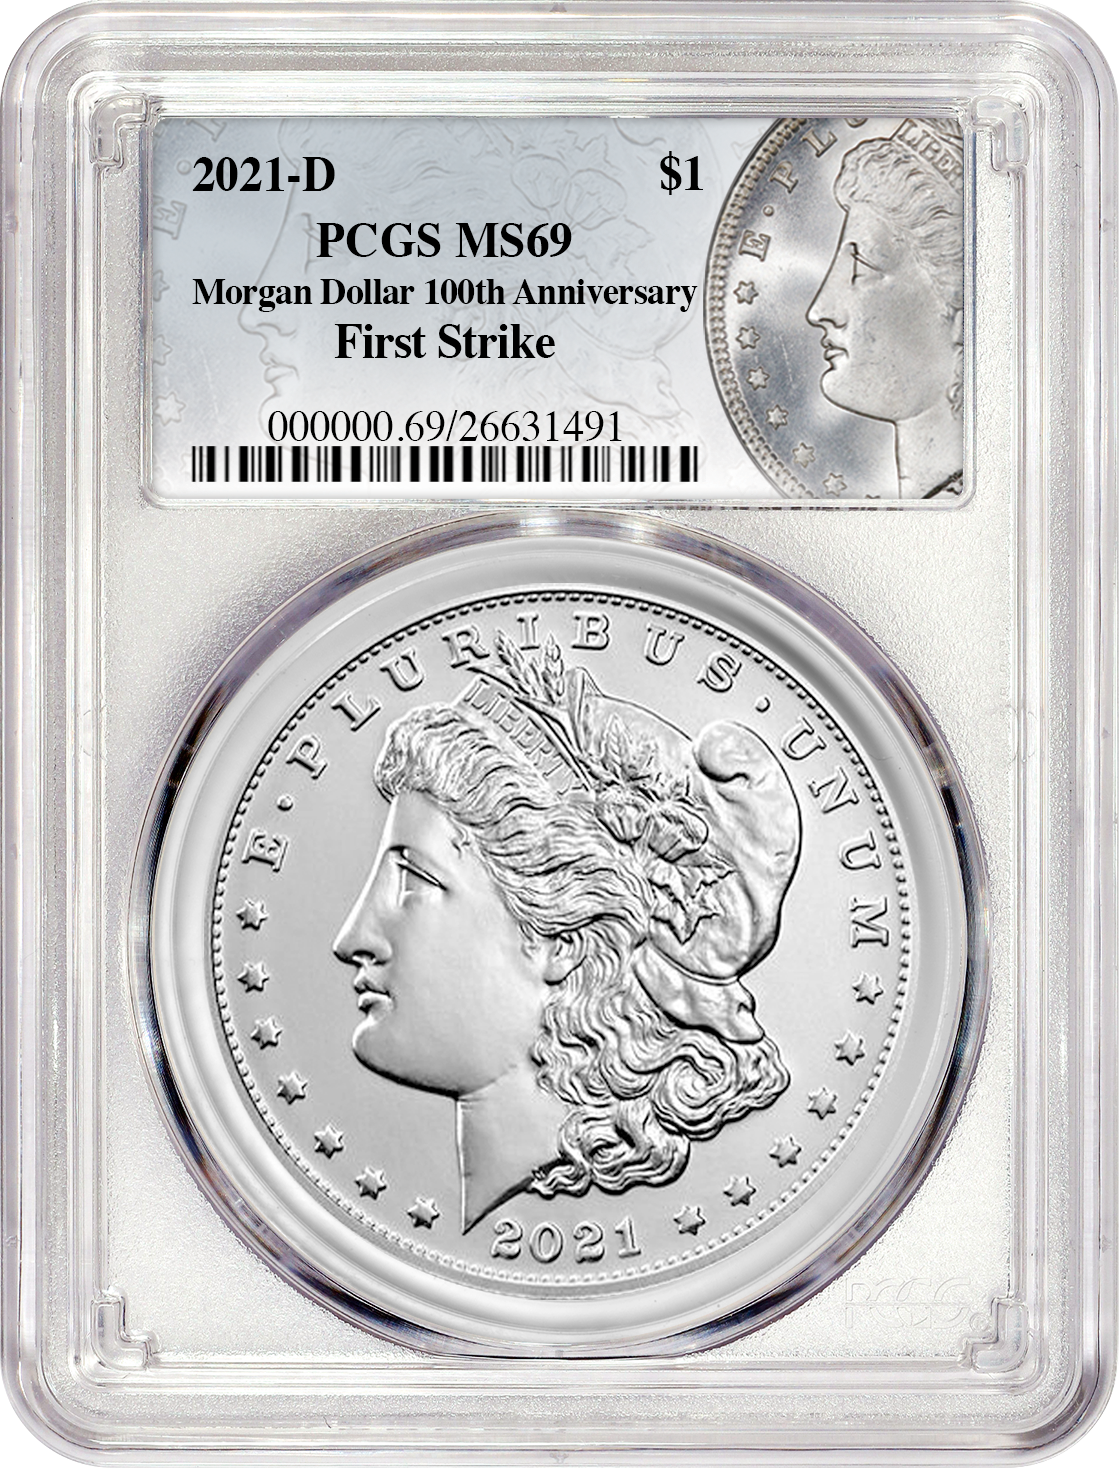 Knox Mint | Morgan 2021 Silver Dollar with D Mint Mark - PCGS Graded